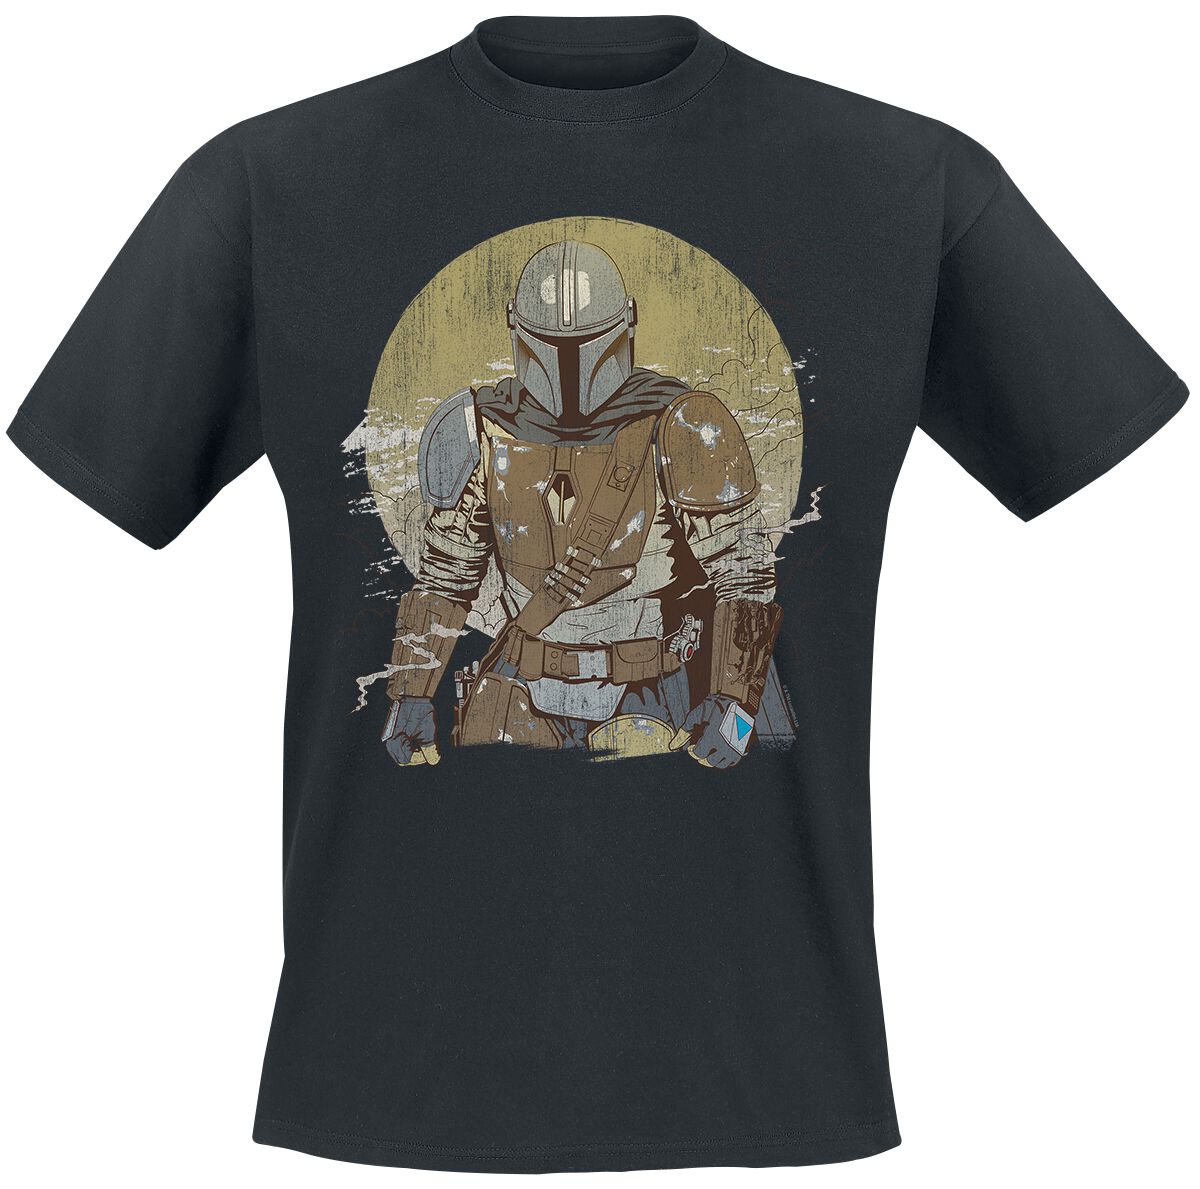 Image of T-Shirt di Star Wars - The Mandalorian - Vintage - S a XXL - Uomo - nero